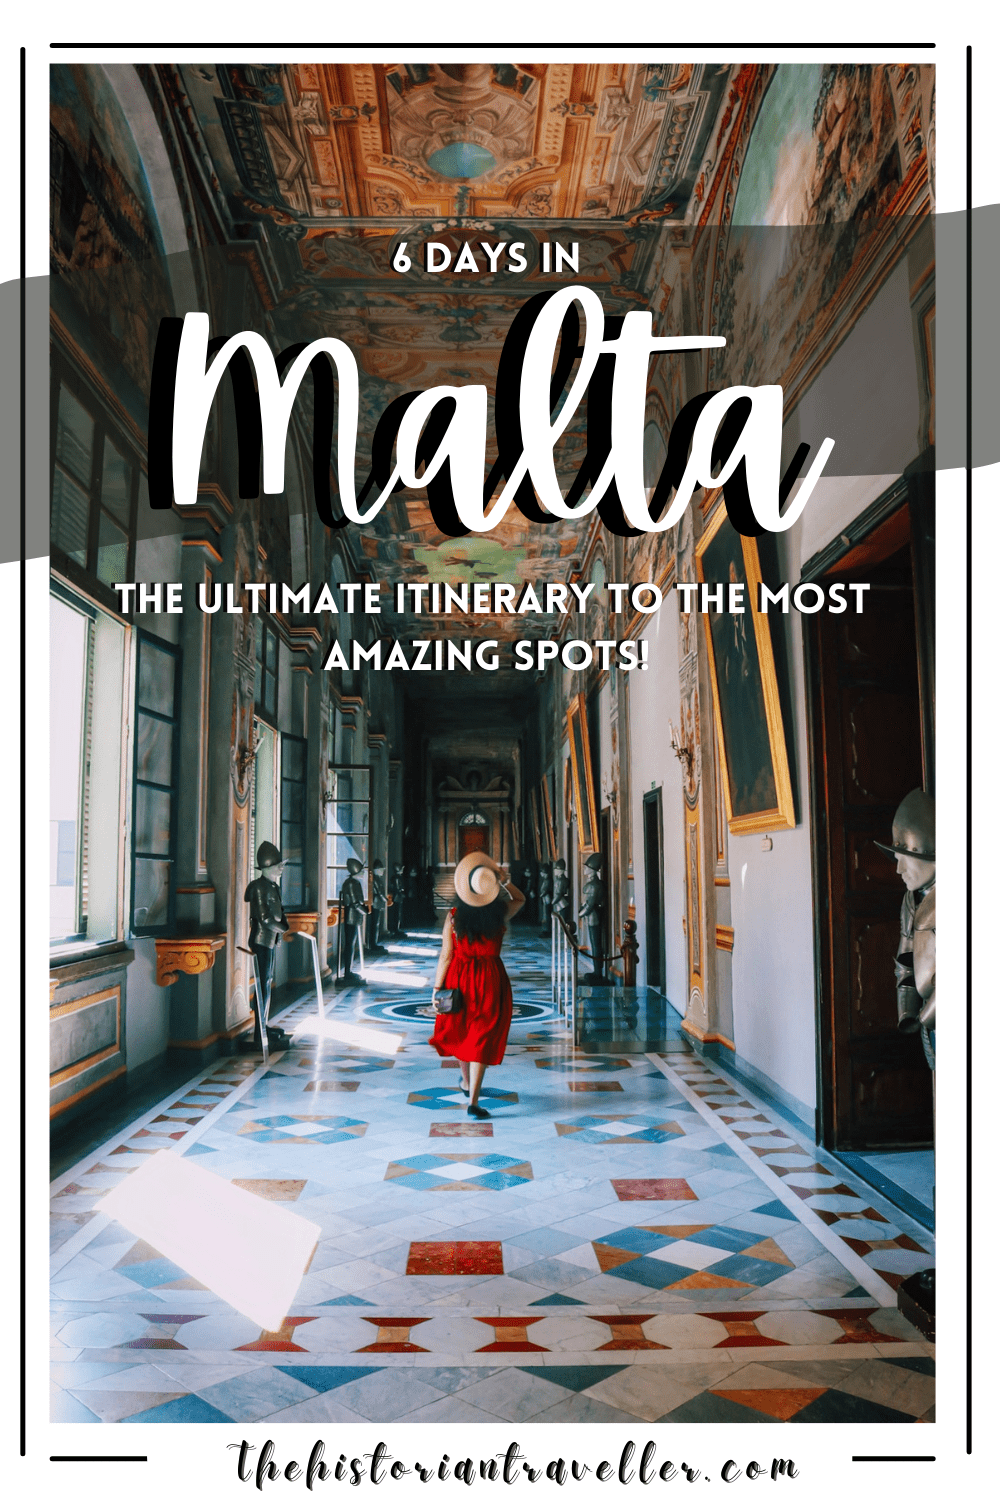 Malta 6 days itinerary